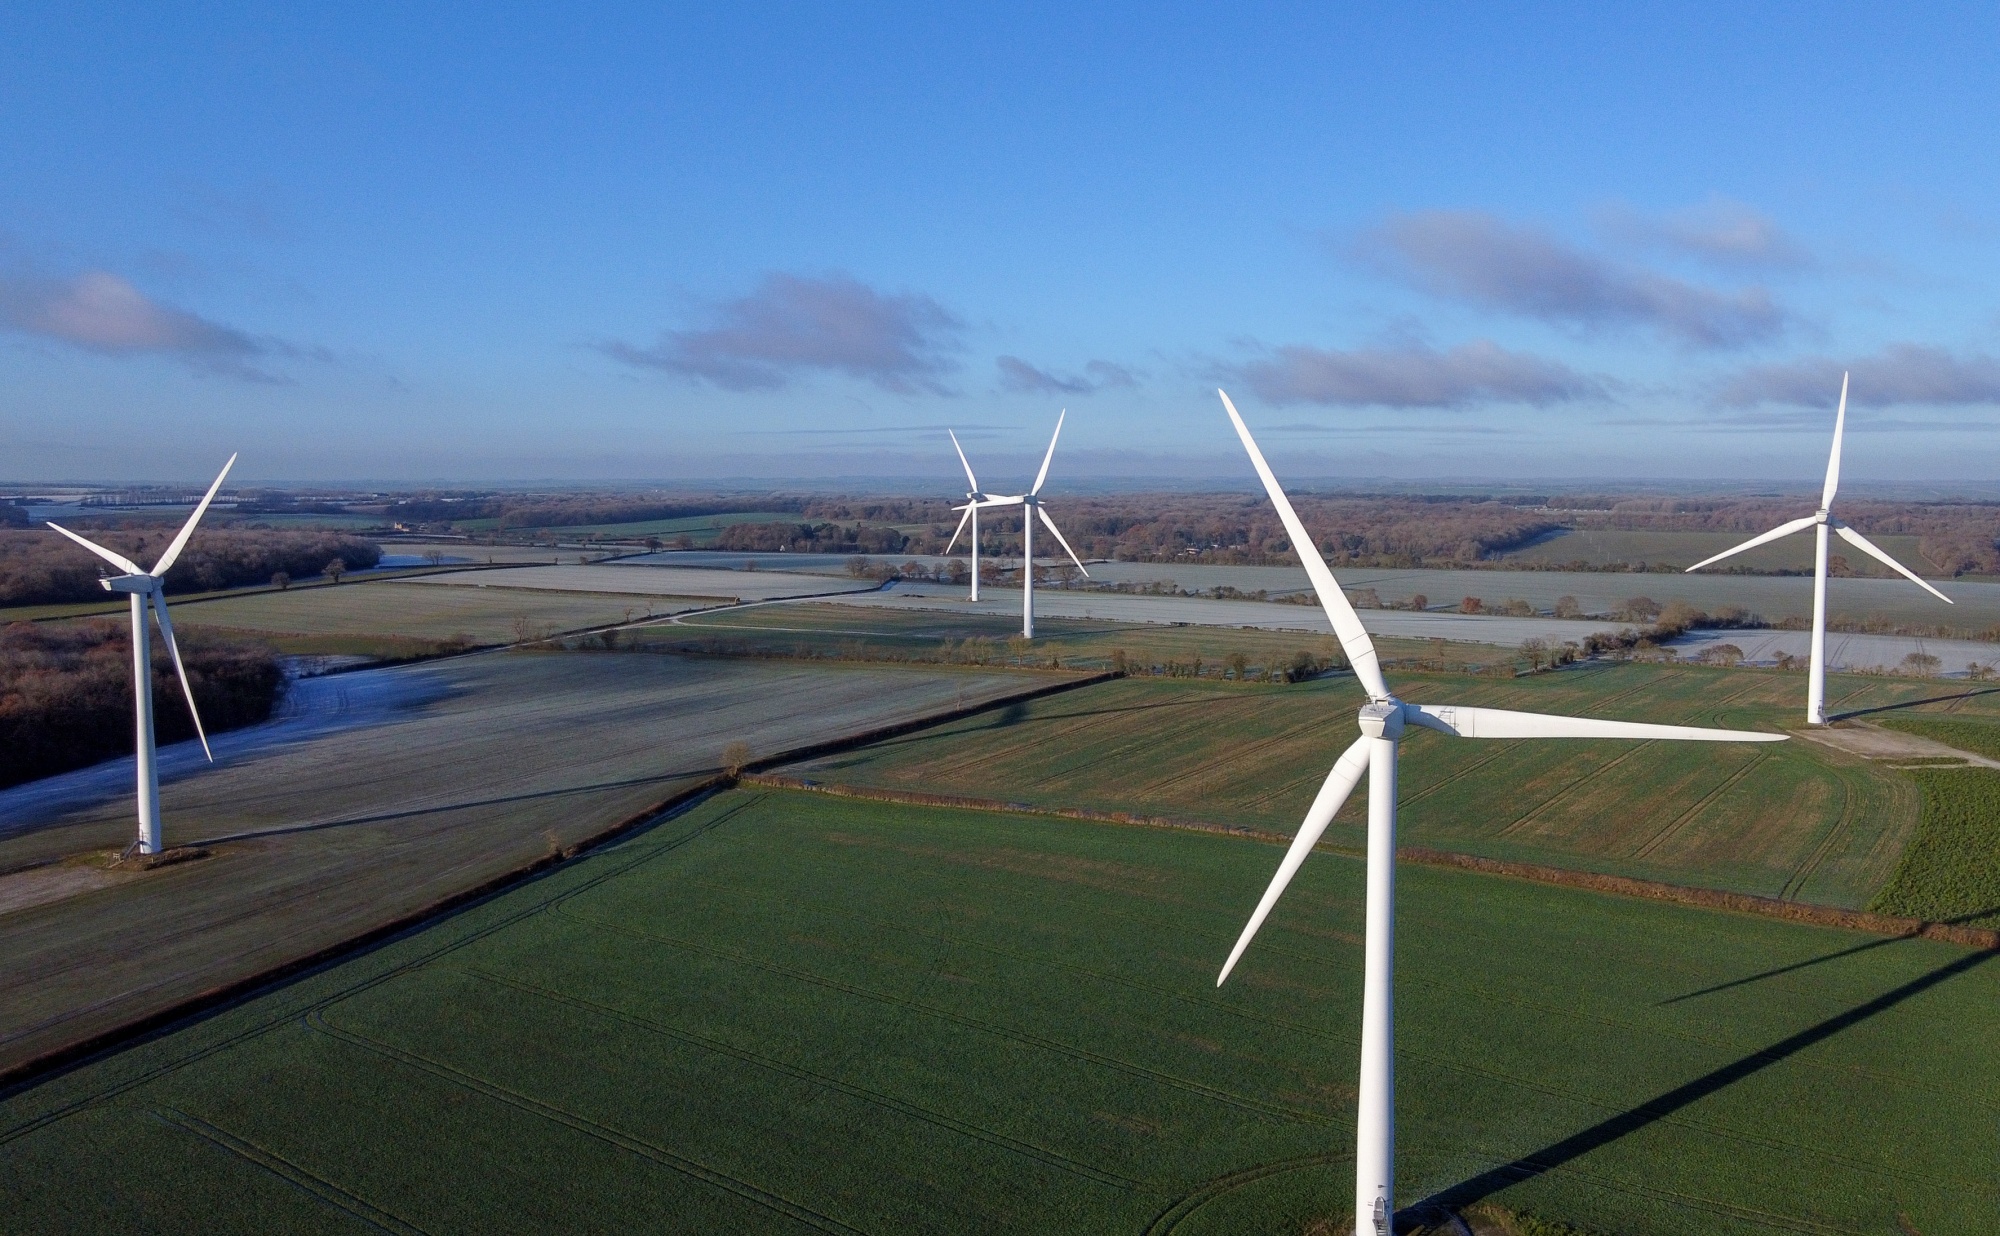 New Albion wind farm near Rushton, UK, on Dec. 14